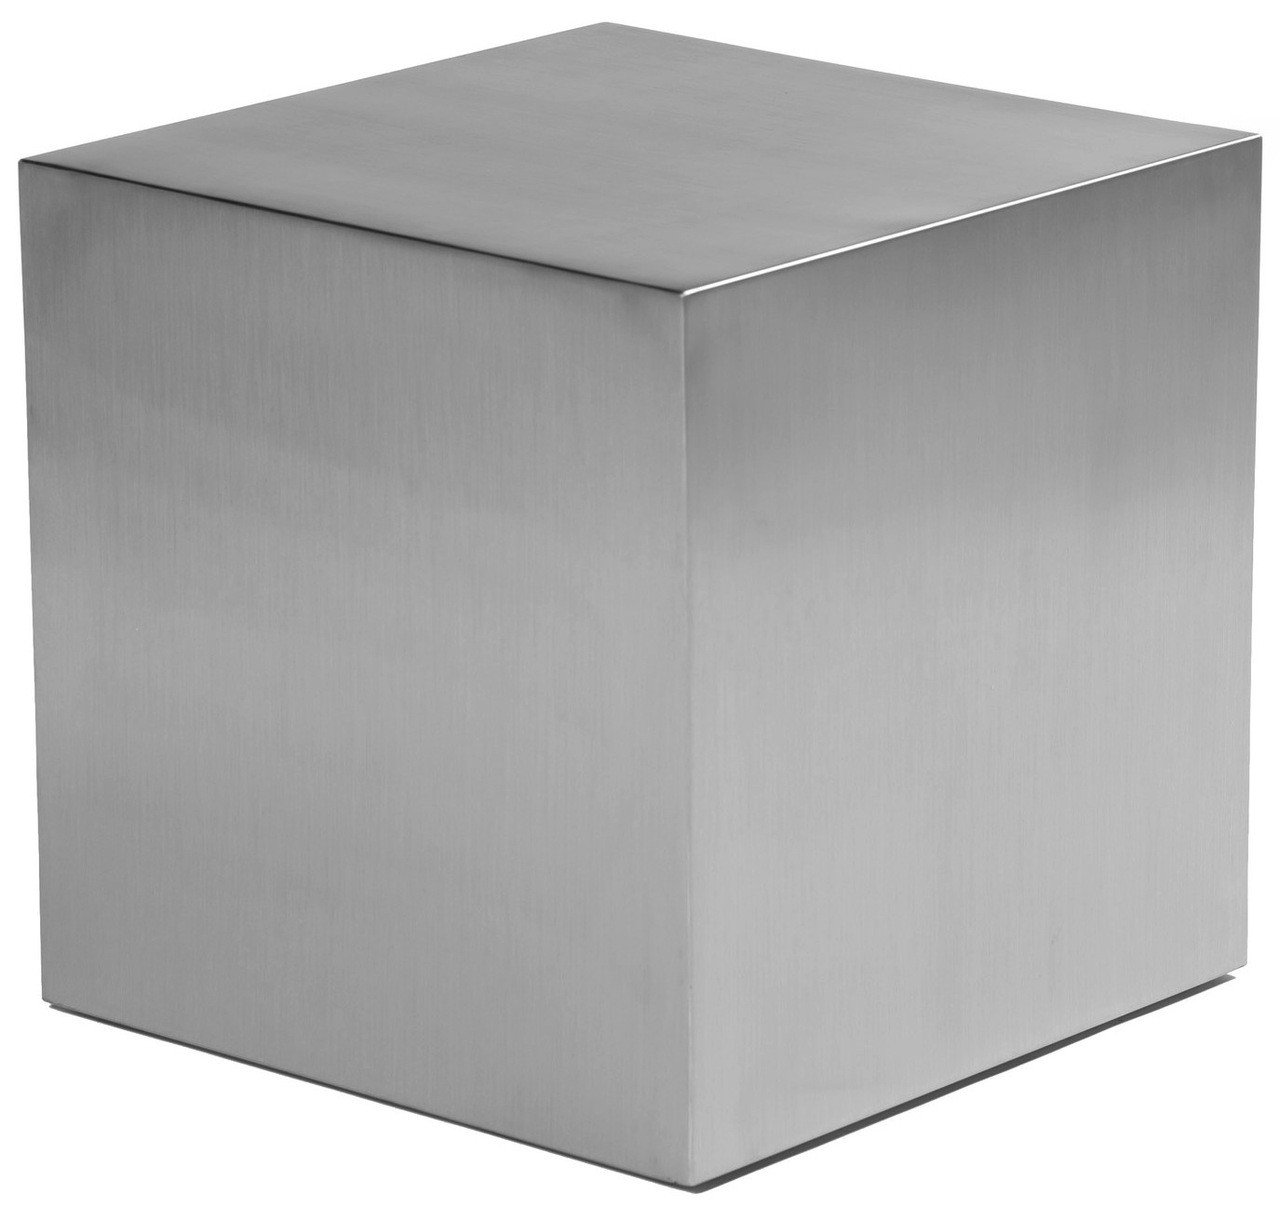 Stainless Steel Cube Side Table - Advancedinteriordesigns.com